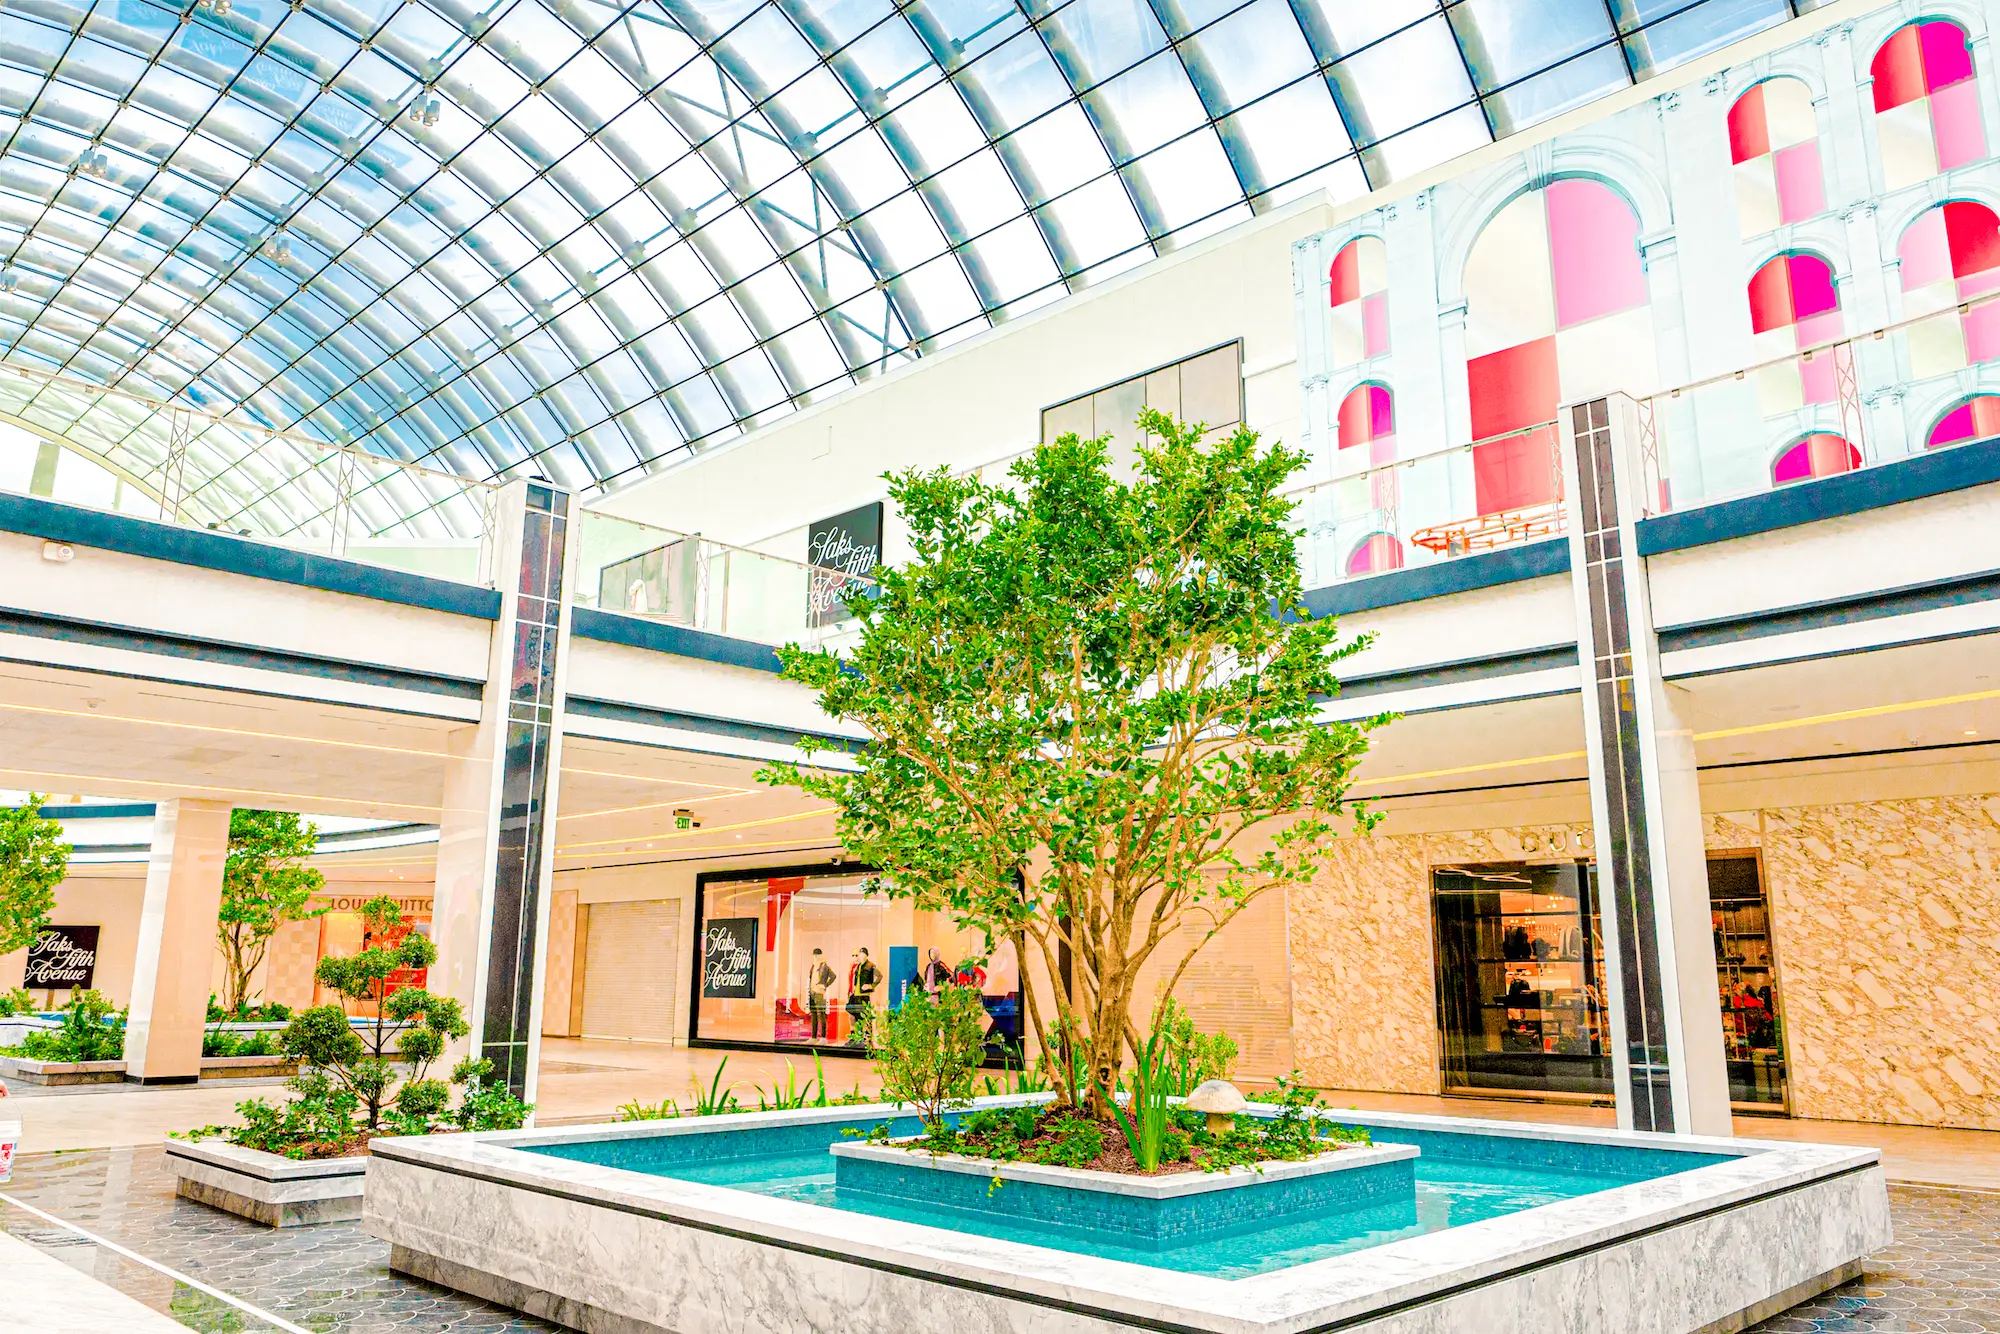 America's amazing luxury malls